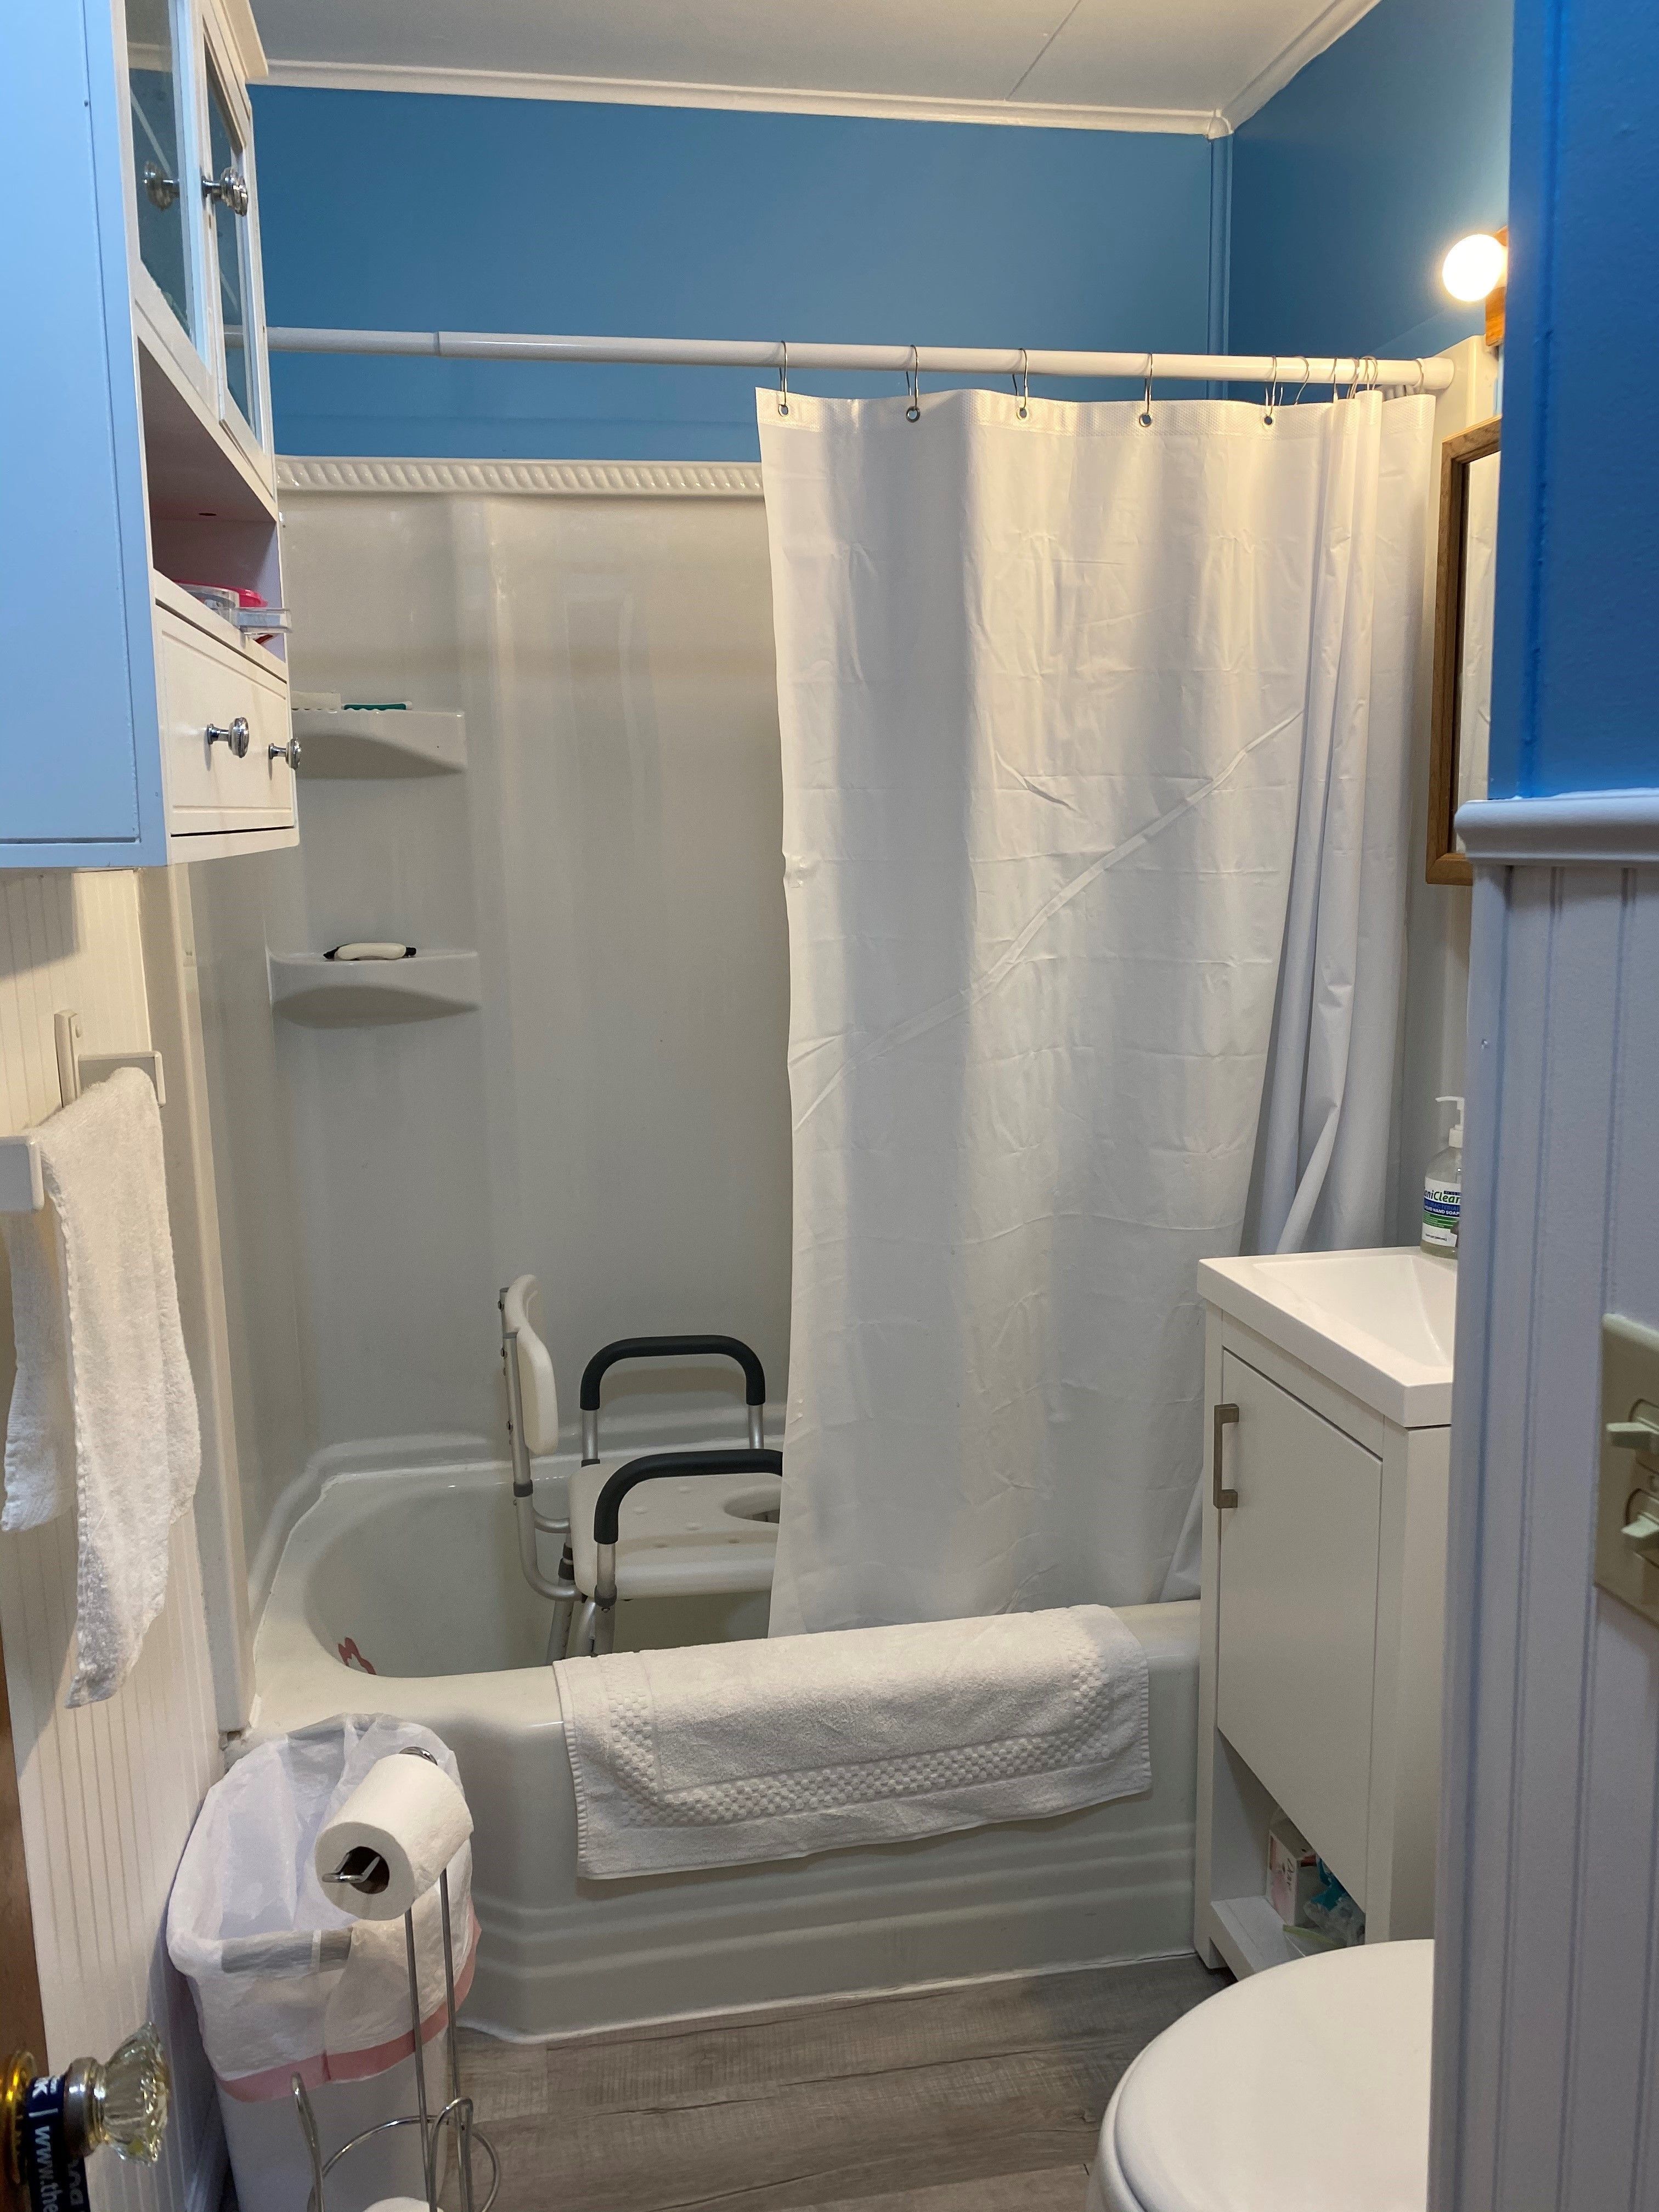 New bathroom a big relief for elderly Springfield homeowner